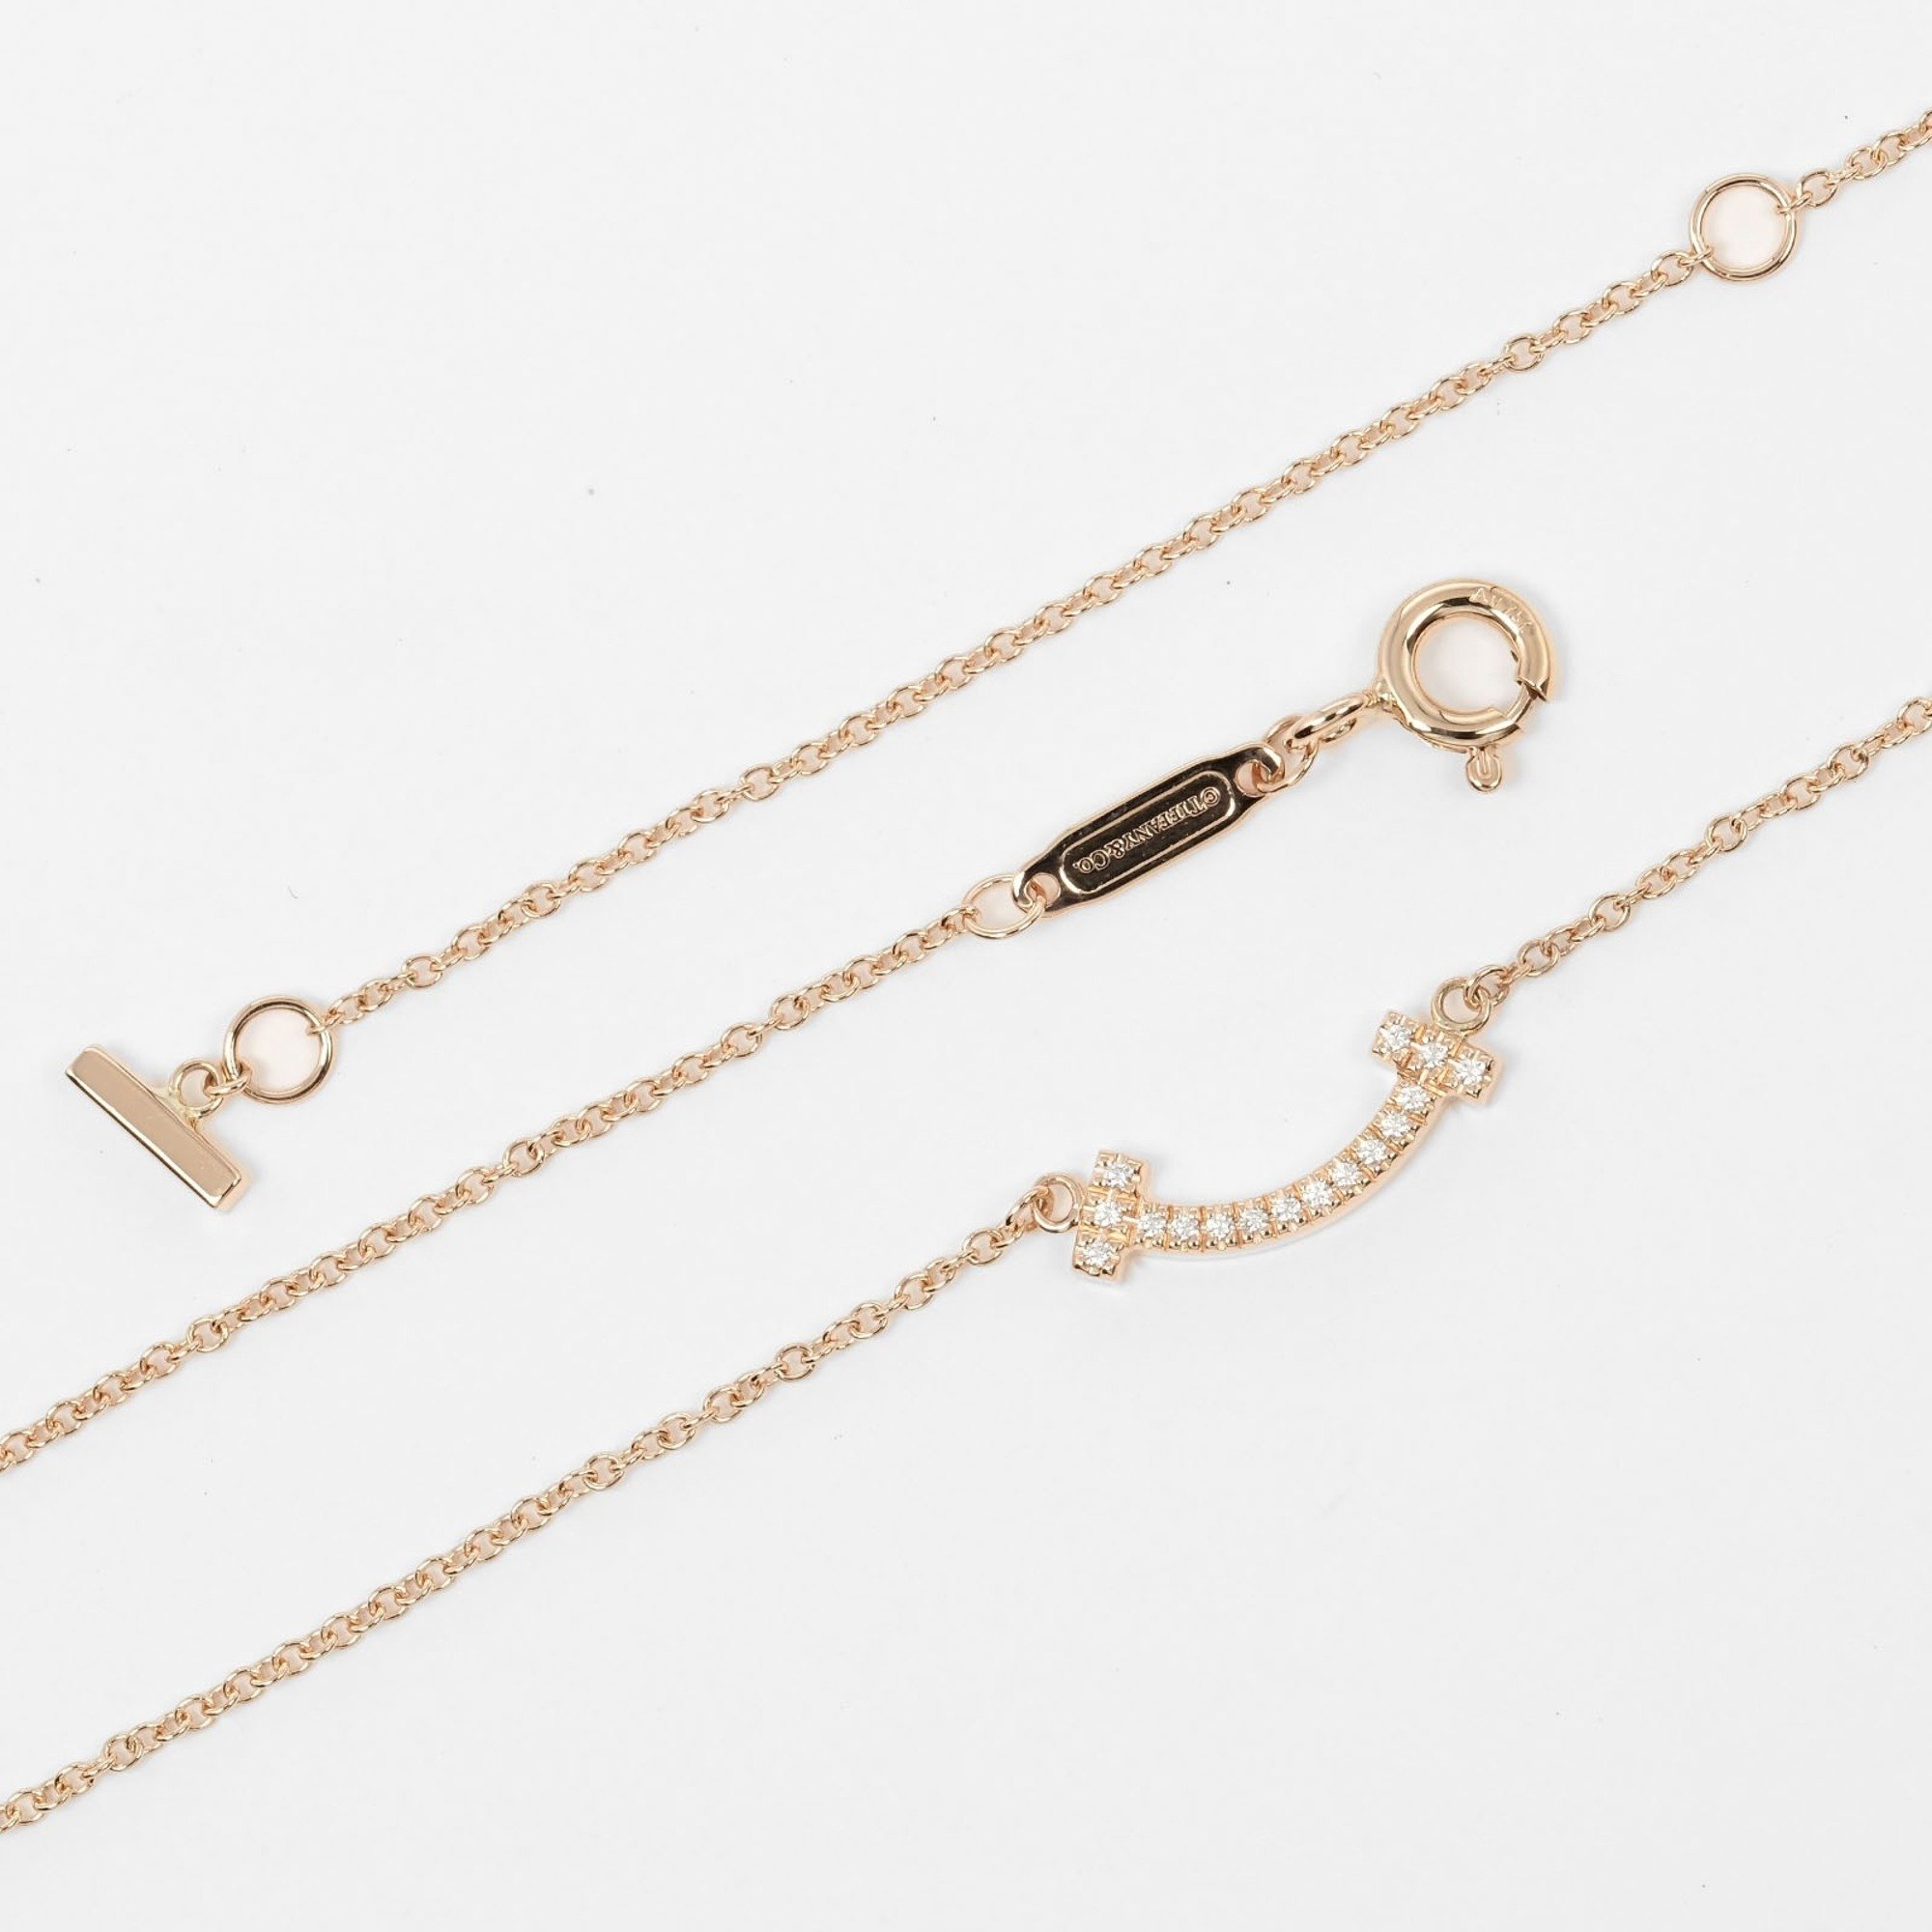 Tiffany & Co. T Smile Necklace, K18 PG Pink Gold, Diamond, Approx. 0.8 oz (2.31 g), I132124037